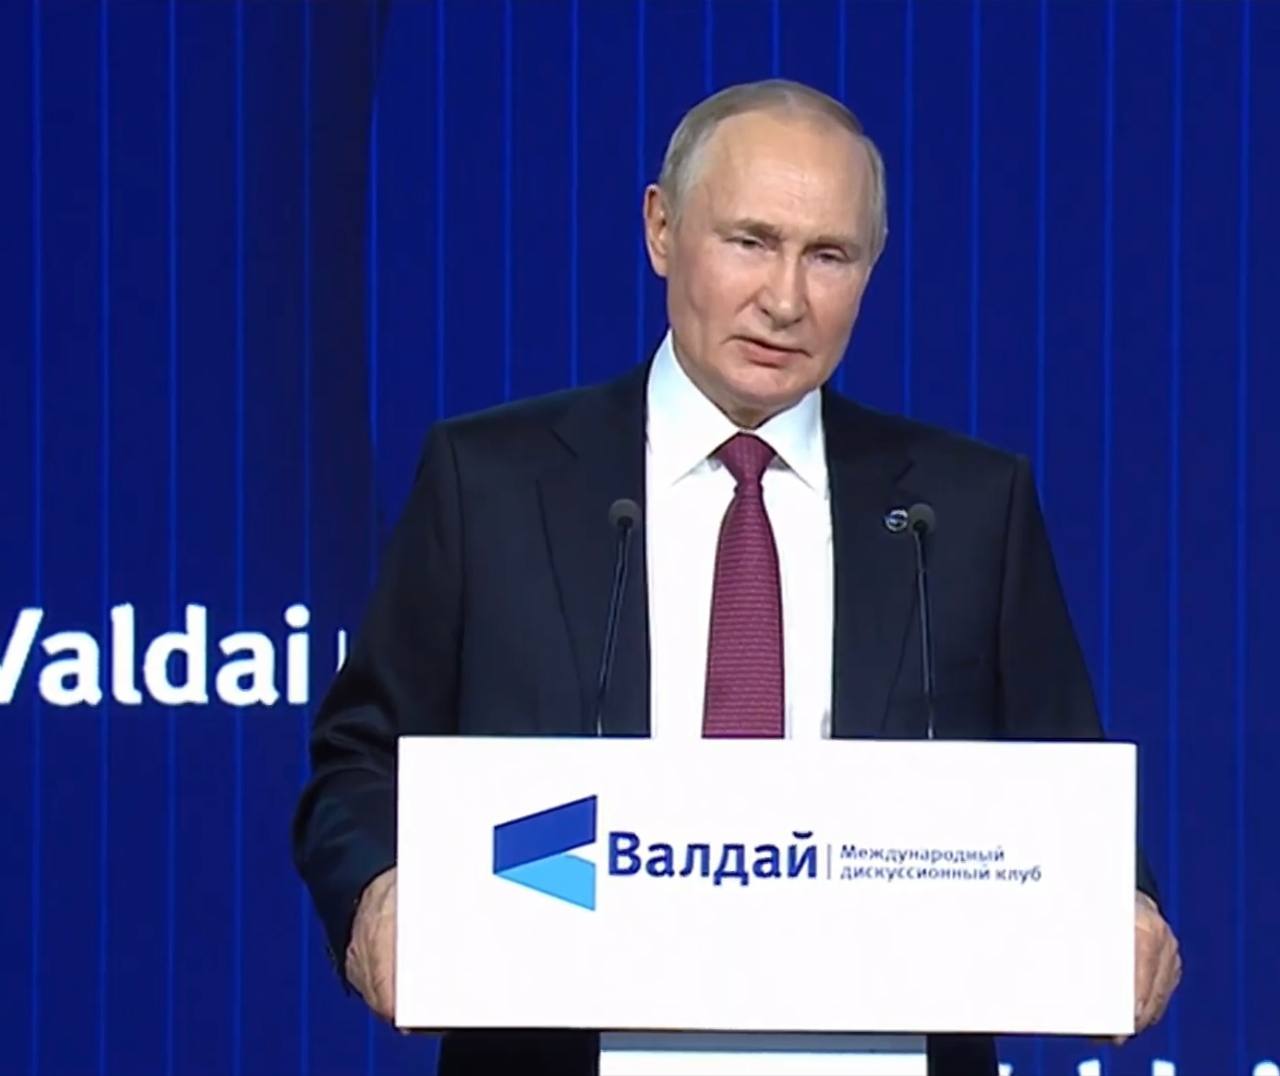 Highlights from Vladimir Putin’s speech in Valdai The Fashion Vibes